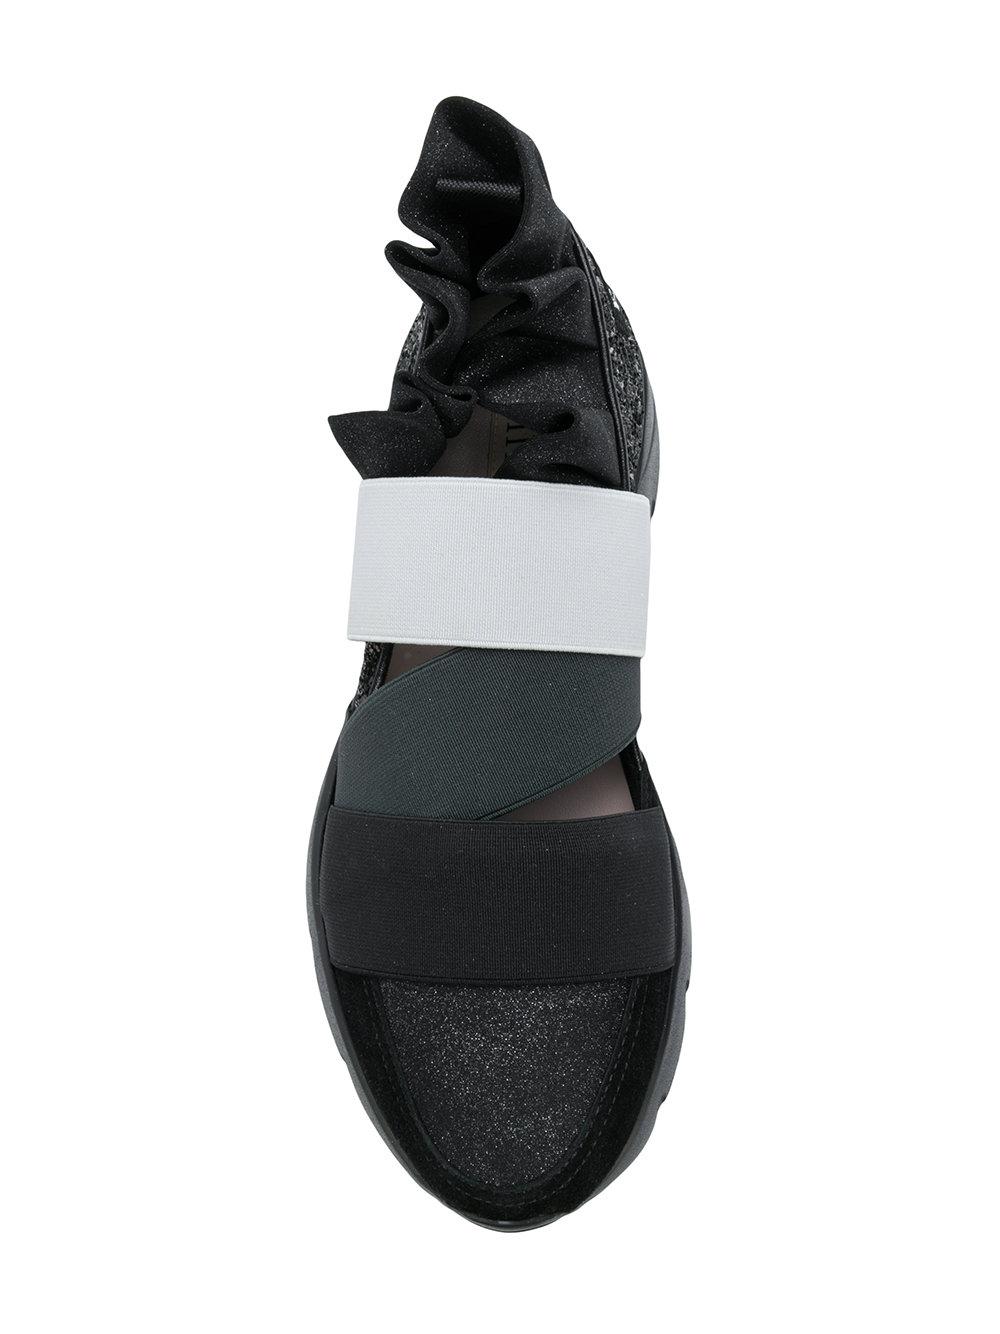 Emilio Pucci Logo Print Stan Smith Shoes - EmonShop - Tagotee